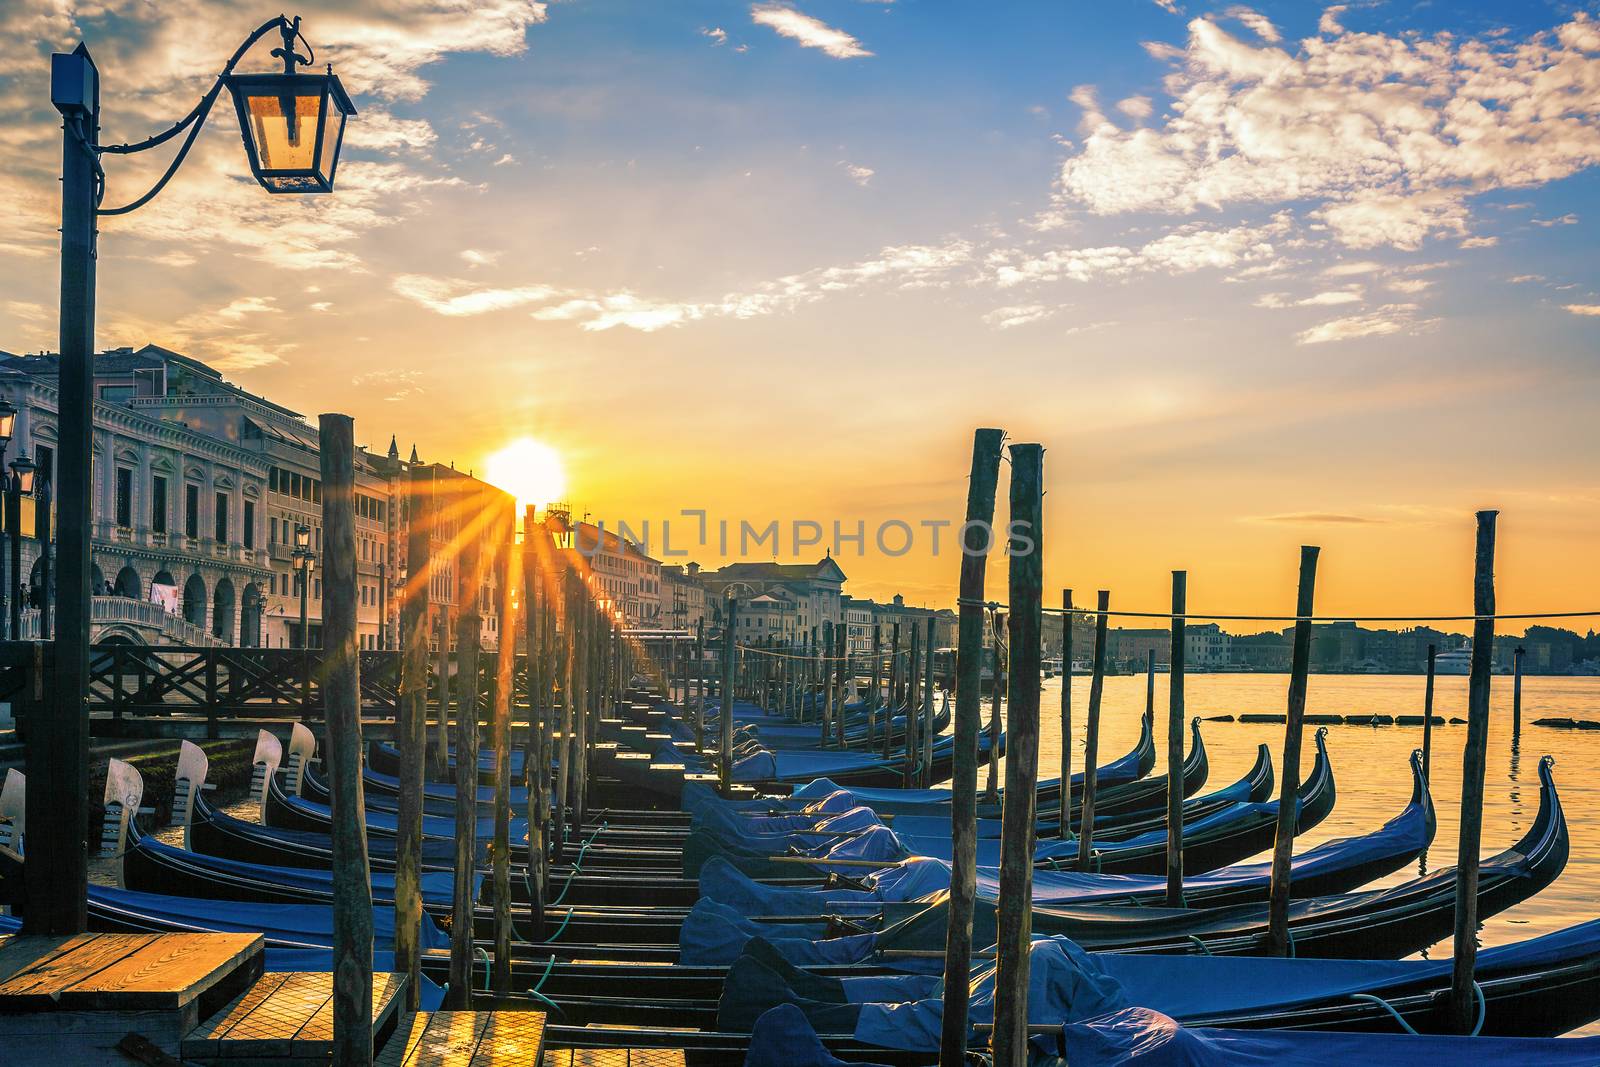 Venice with gondolas at sunrise, Italy